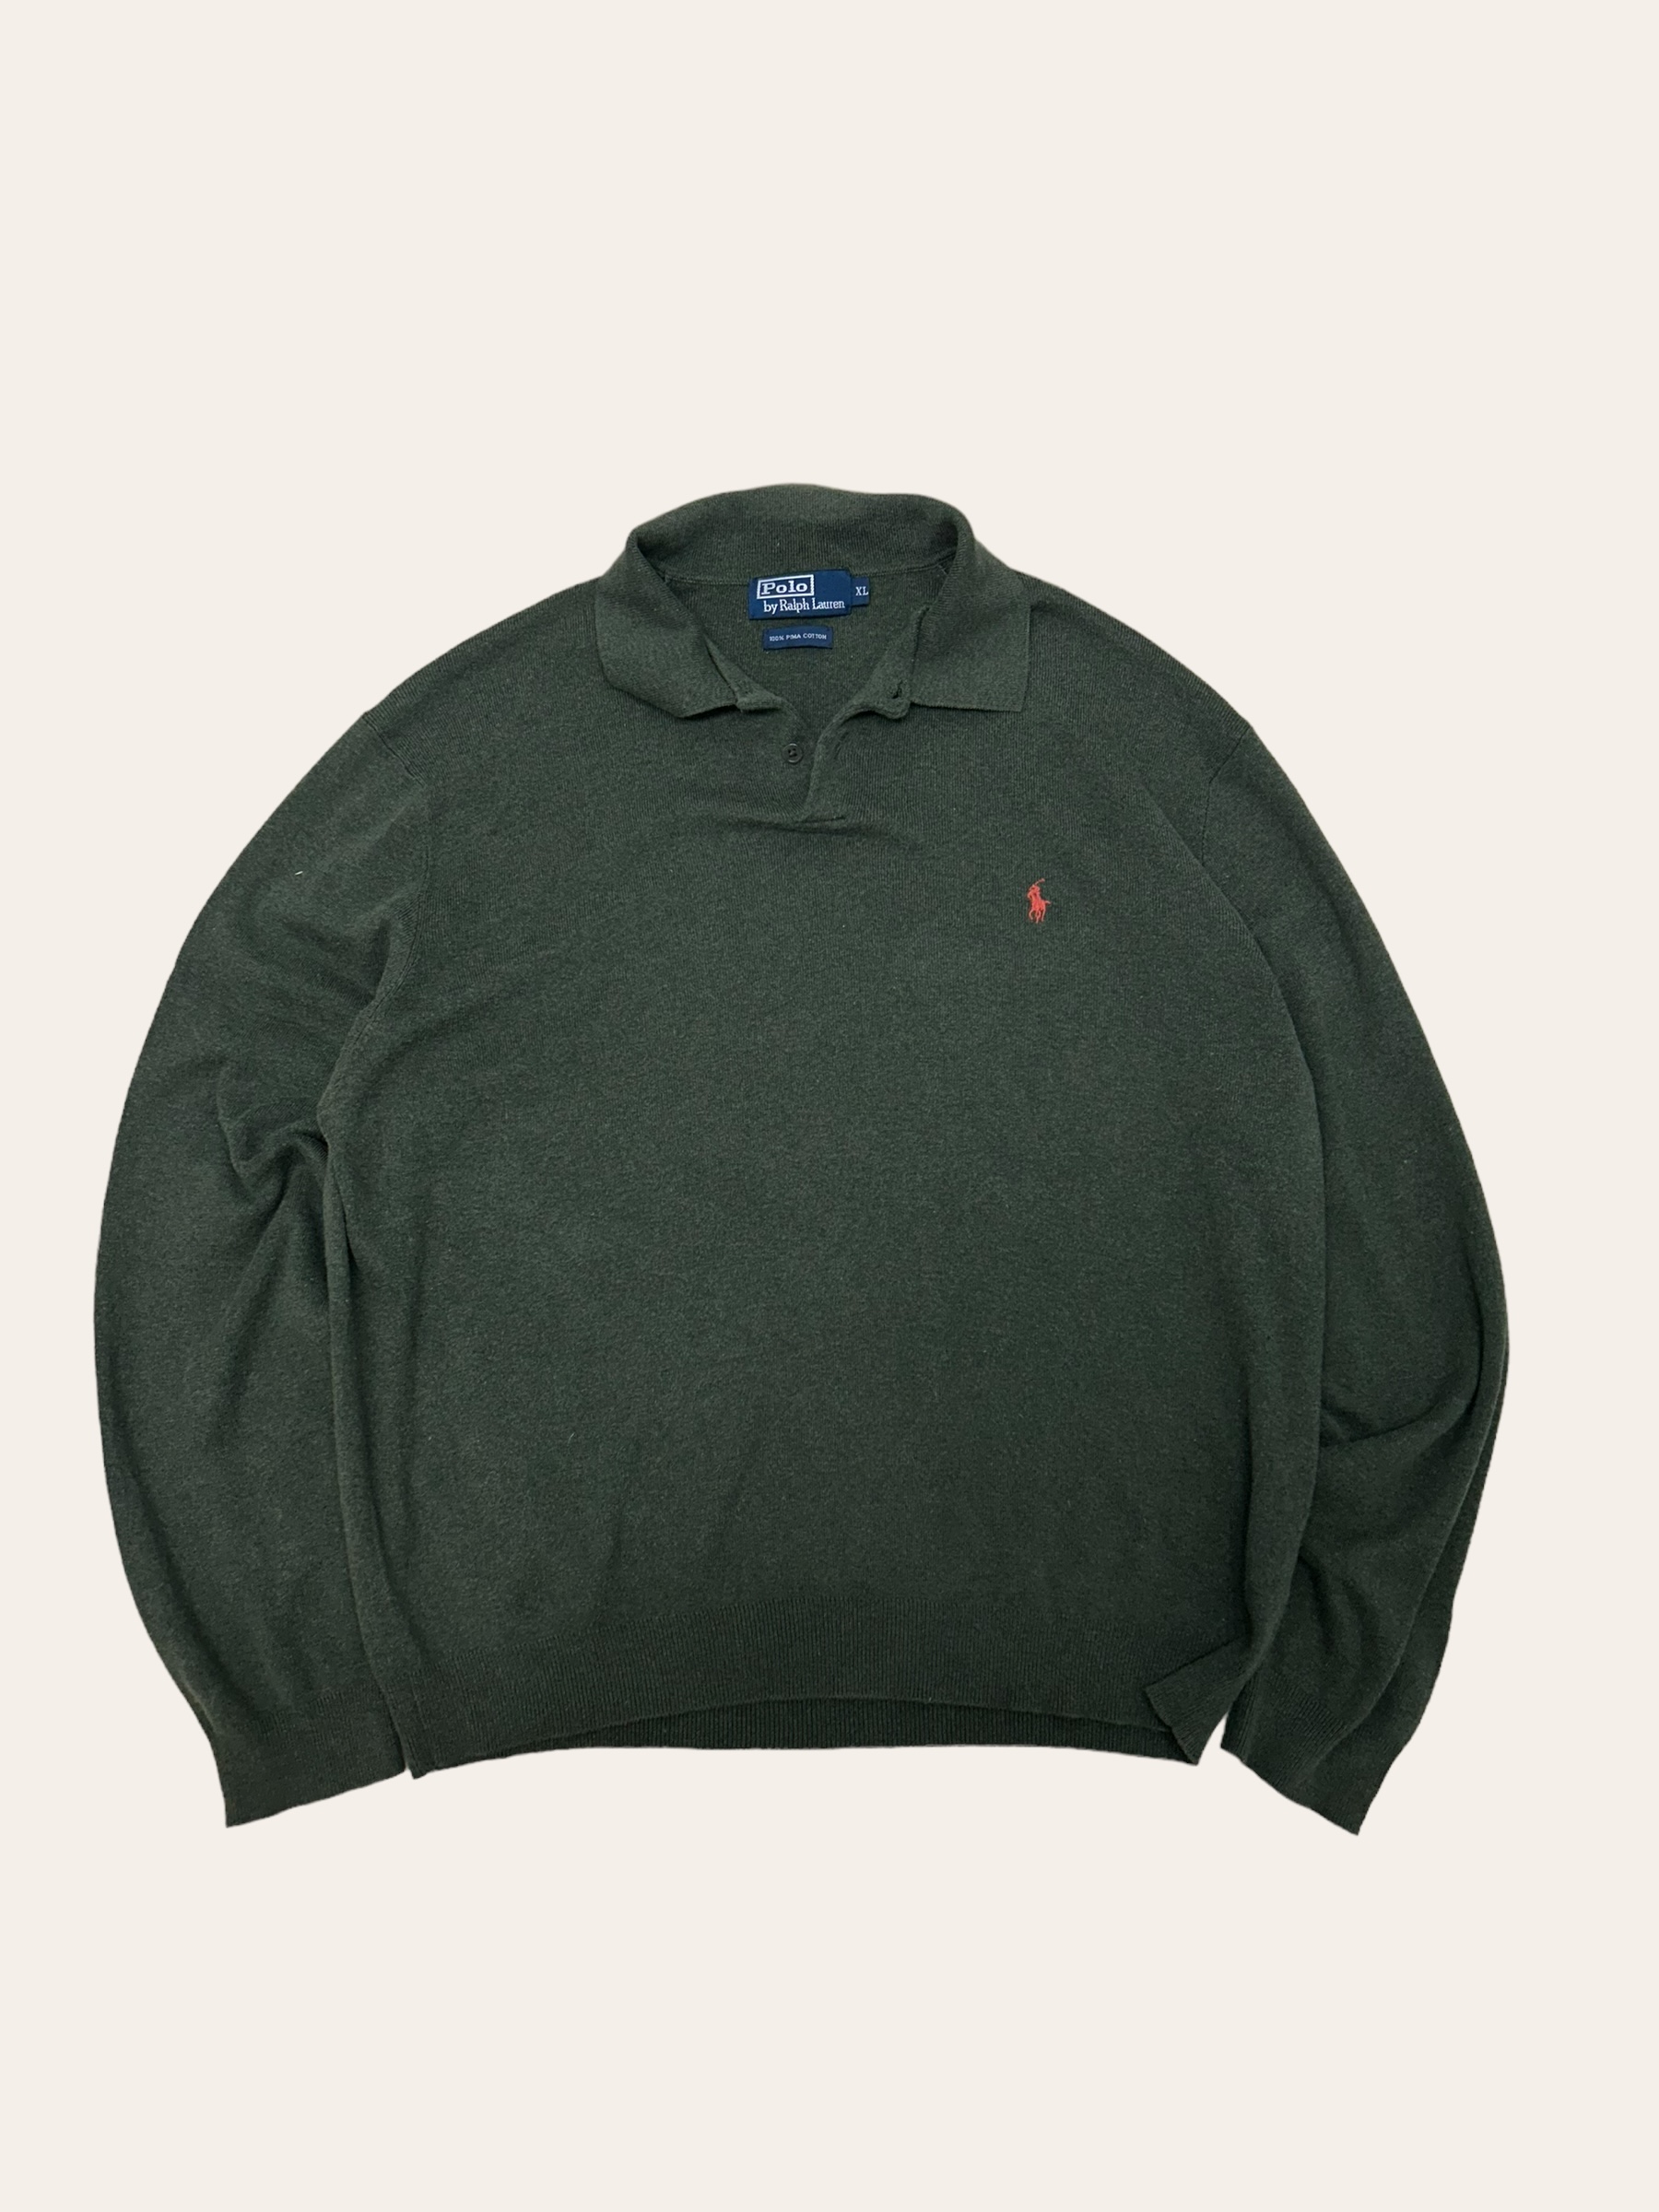 Polo ralph lauren khaki color pima cotton collar sweater XL